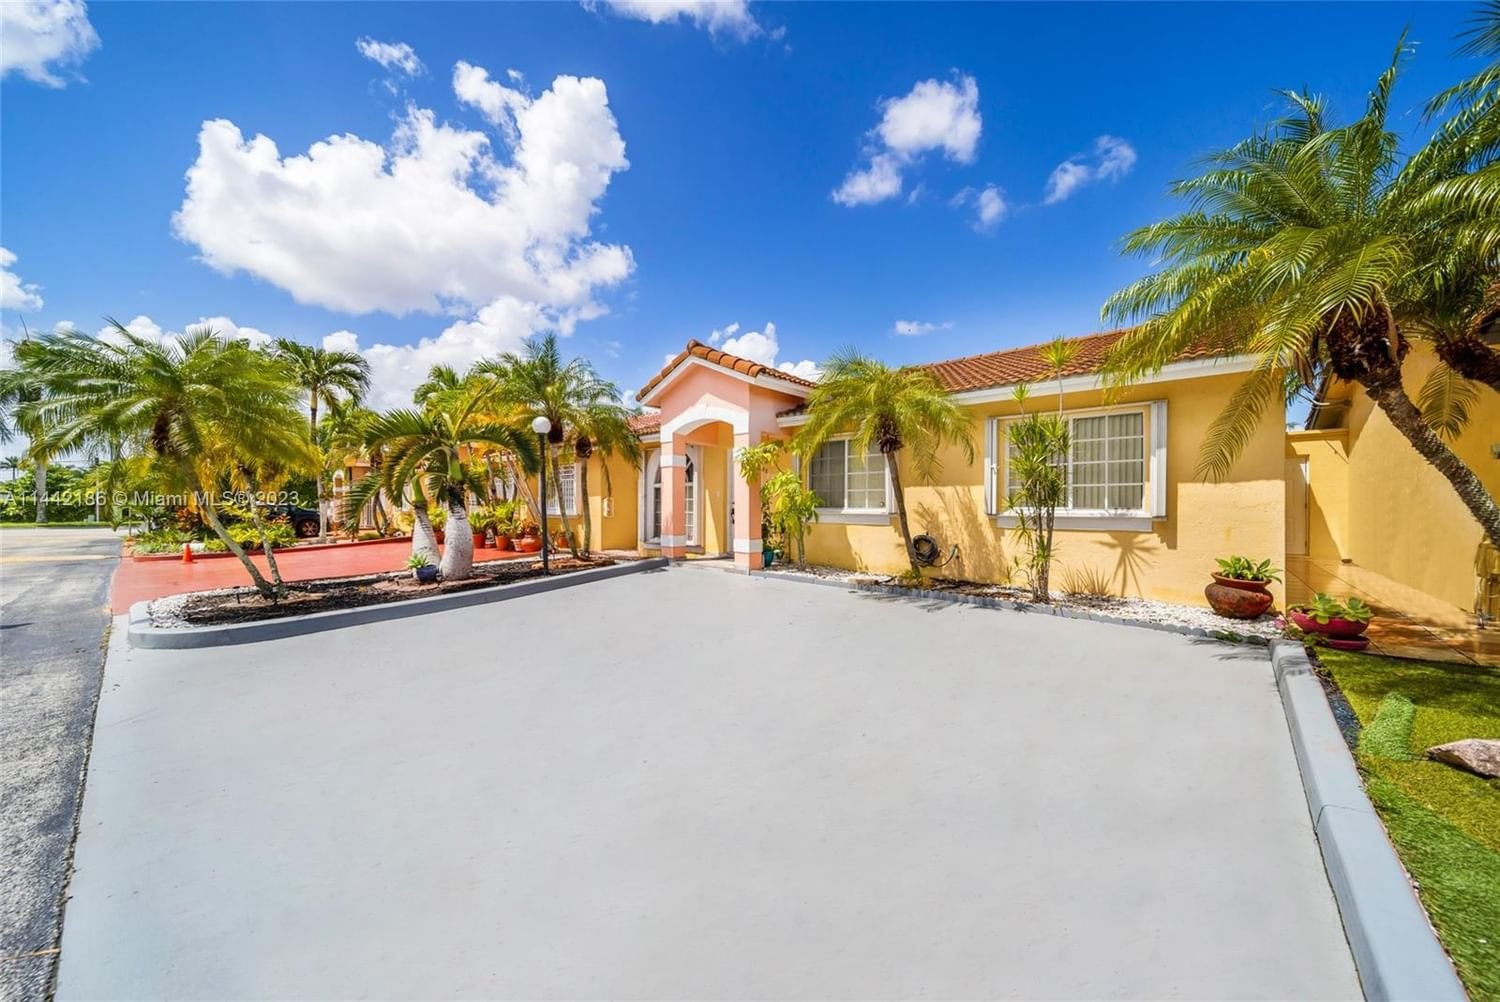 Real estate property located at 8285 186th St #603, Miami-Dade County, SAN MATEO NORTH CONDO, Hialeah, FL